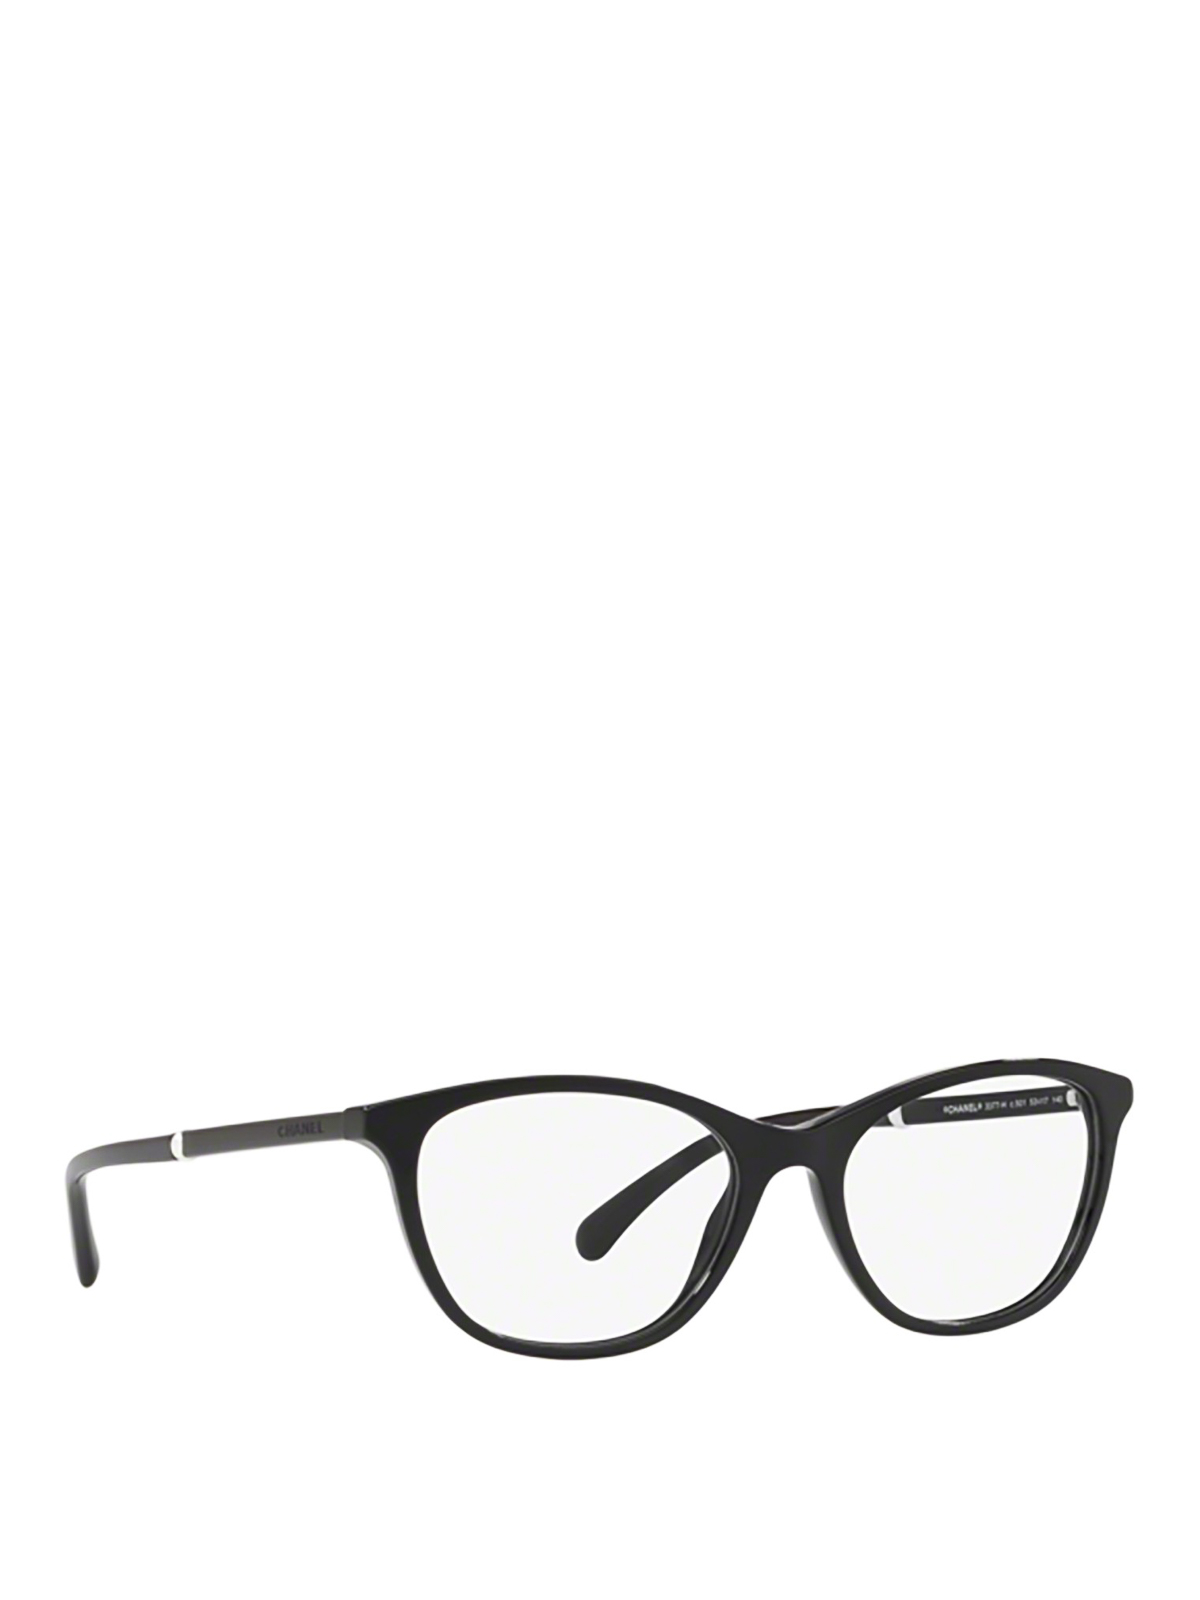 Glasses Chanel - Black acetate eyeglasses - CH3377HC501